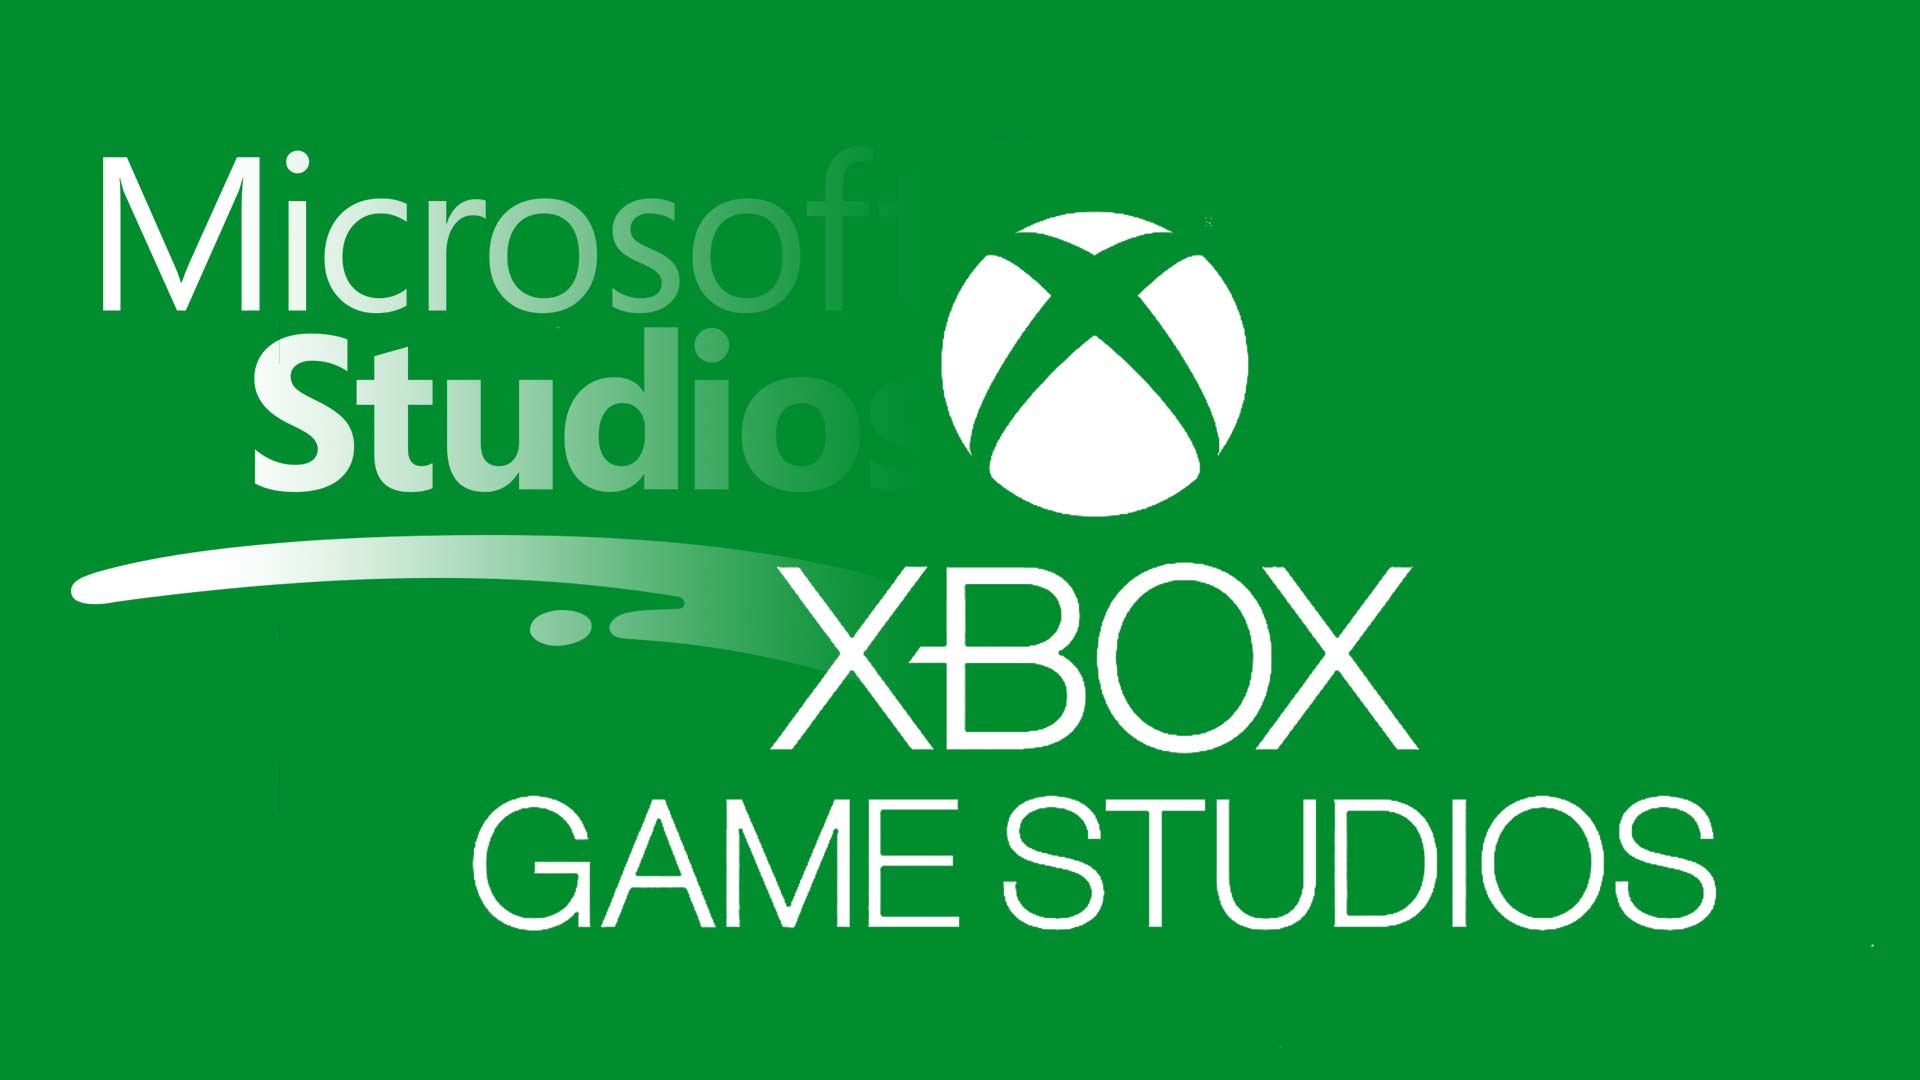 Microsoft Game Studios - logo change